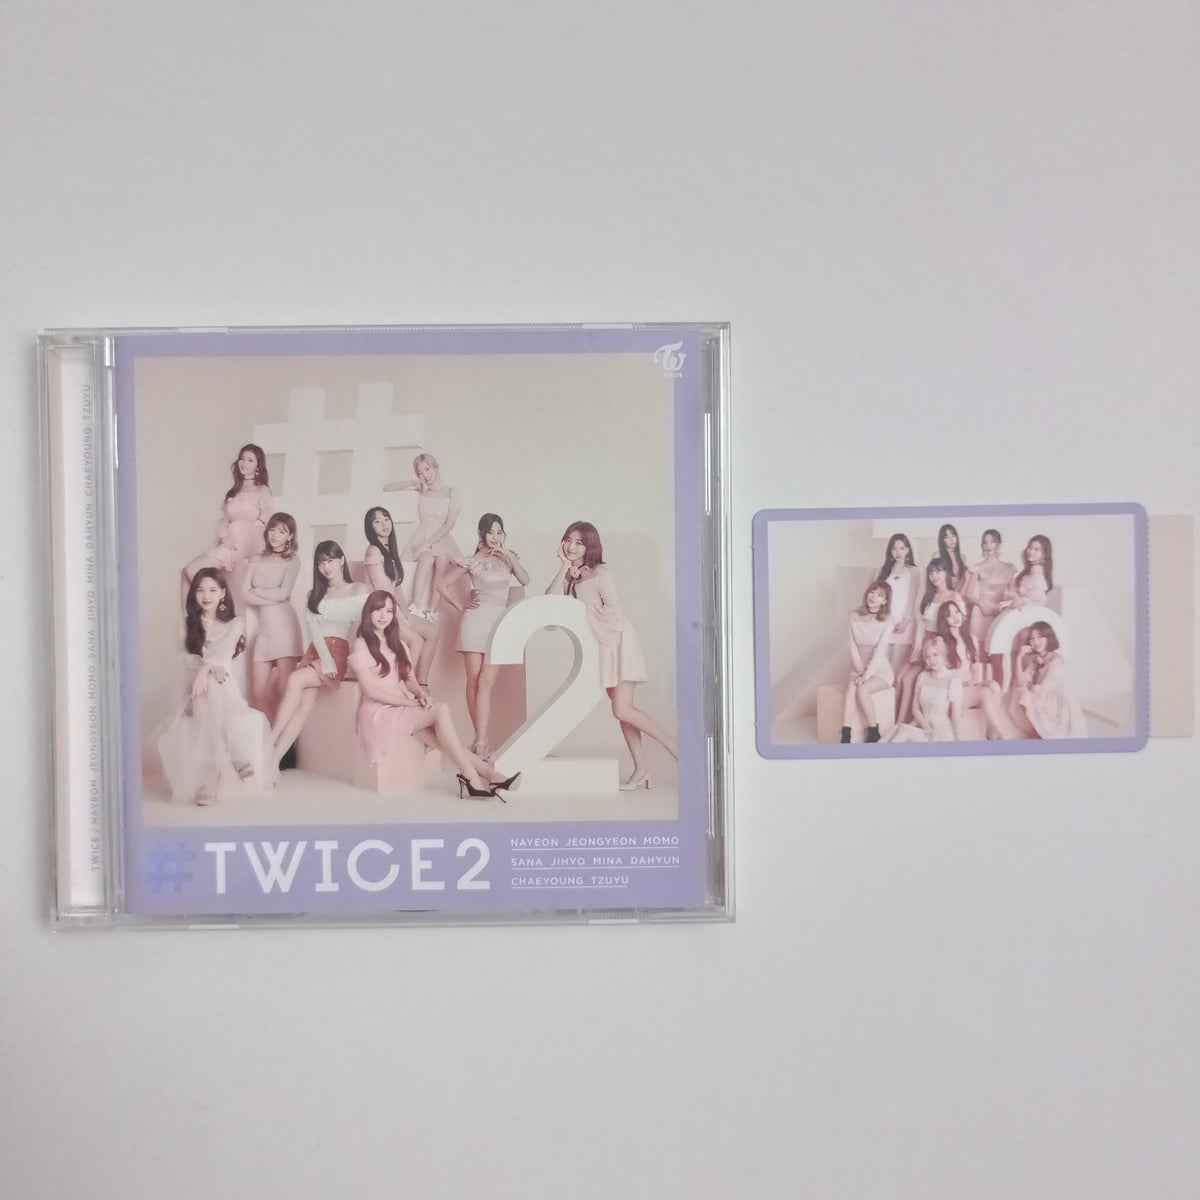 TWICE #TWICE2 "Regular" ver. (abierto) 2nd album compilatorio – piapollo